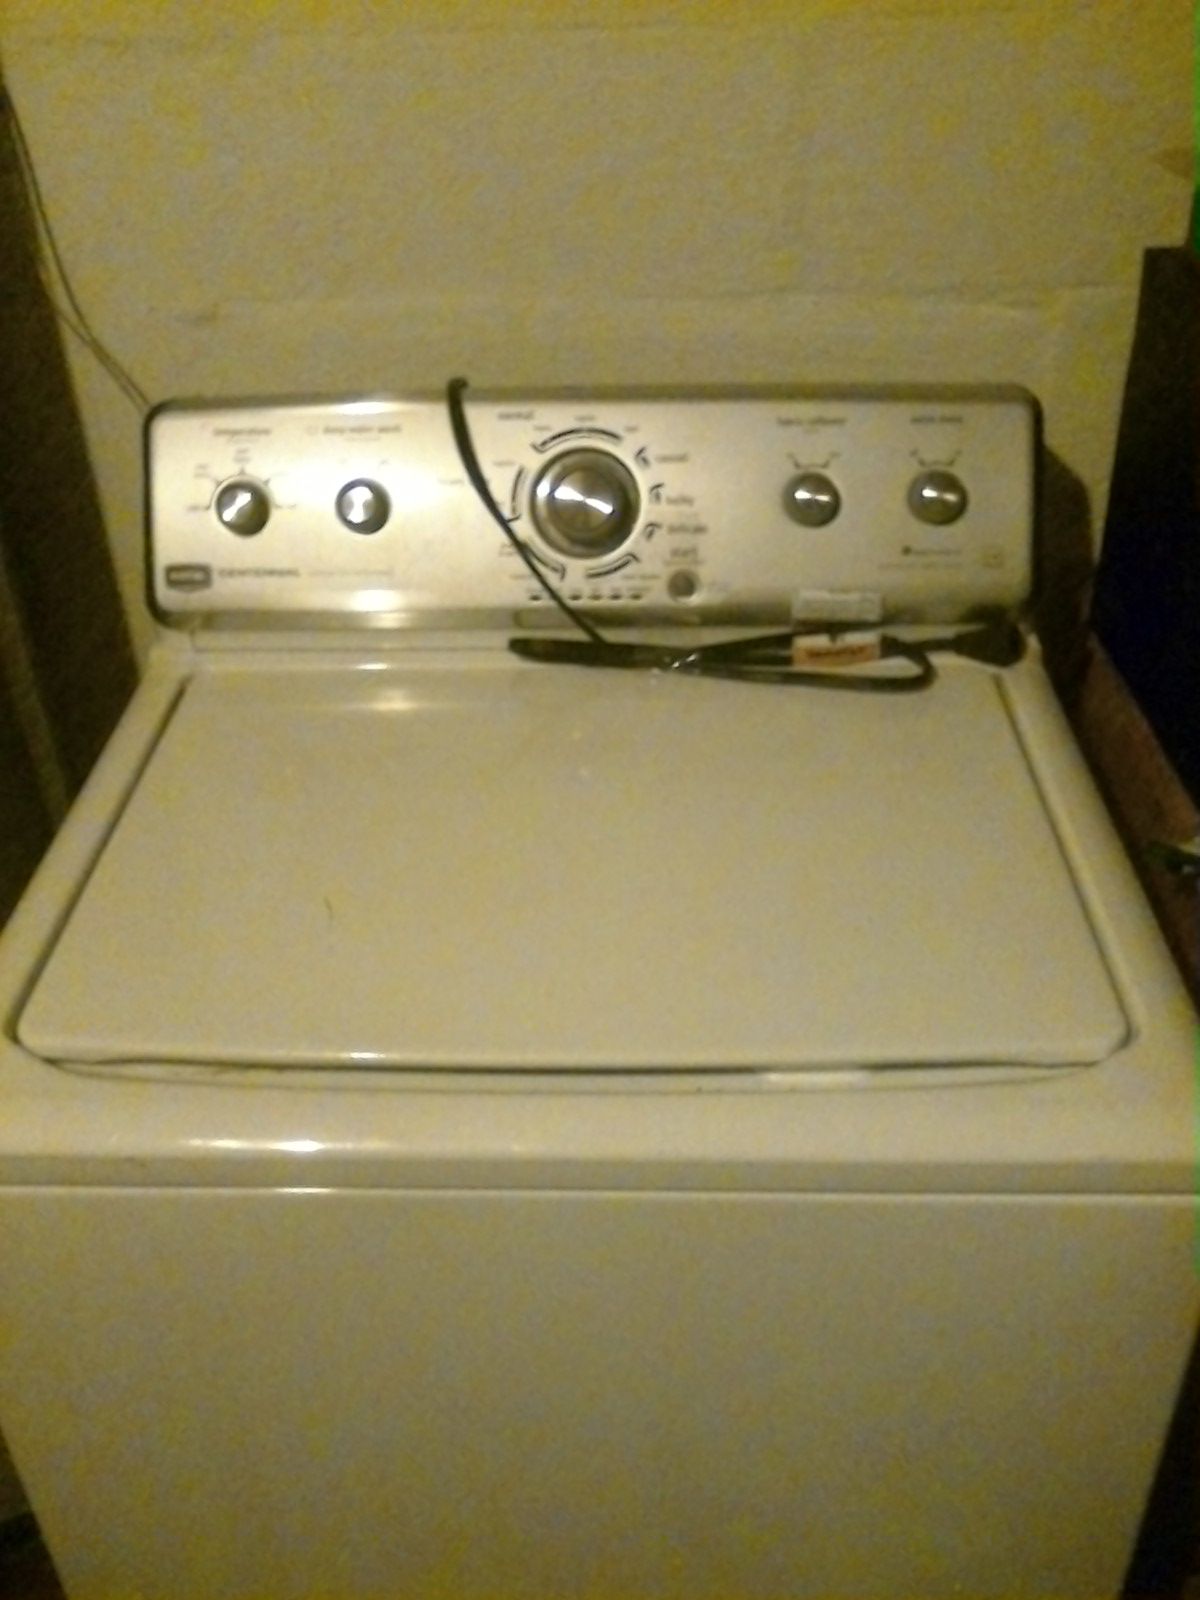 Top load washing machine ,,Maytag